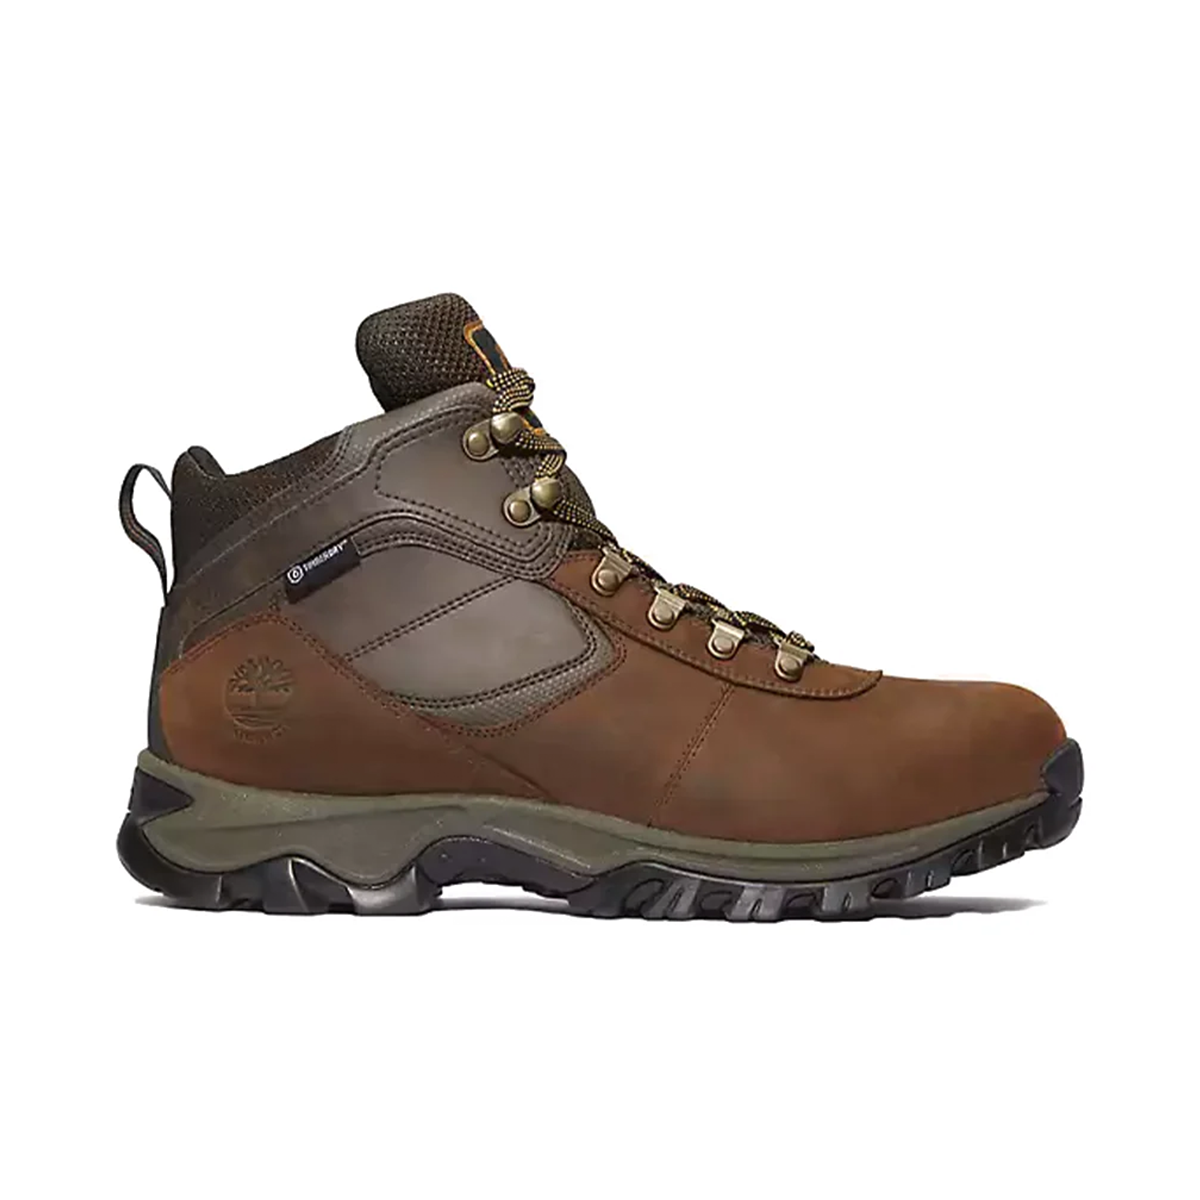 Timberland Men's Mt. Maddsen Waterproof Mid Hiking Boot - Dark Brown